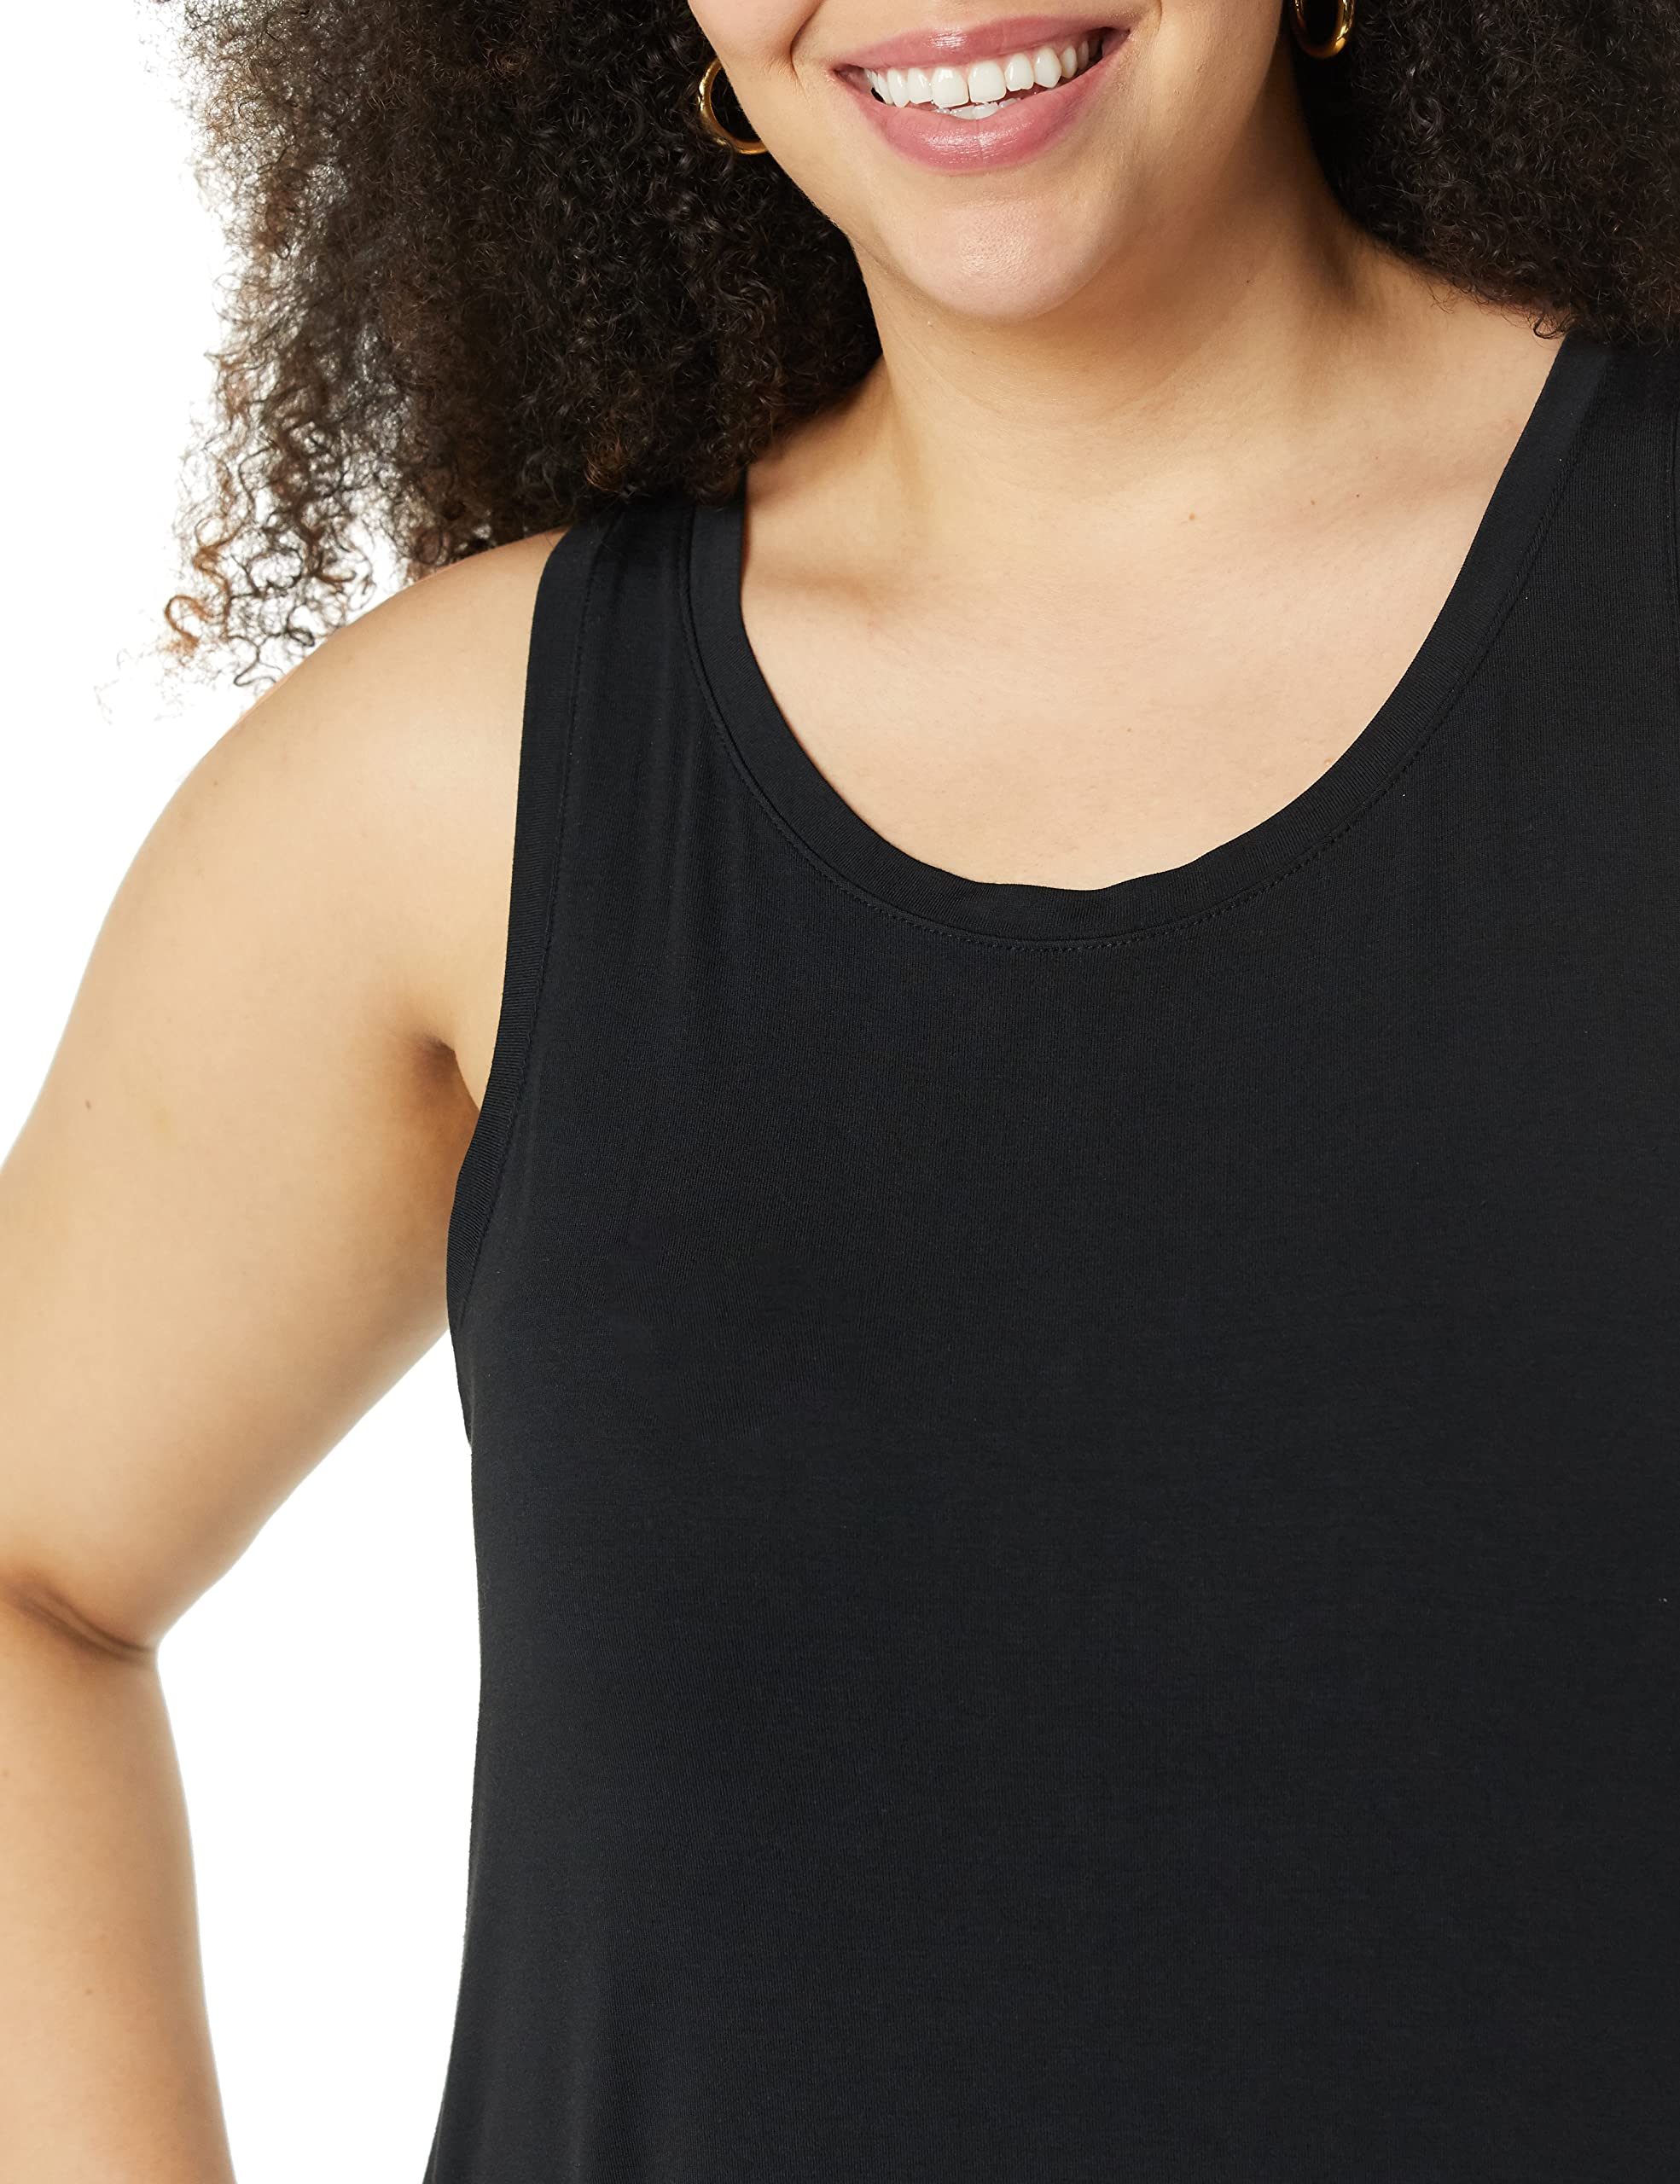 Amazon Essentials Women's Lightweight Jersey Slim-Fit Tank Mini Dress (Previously Daily Ritual)